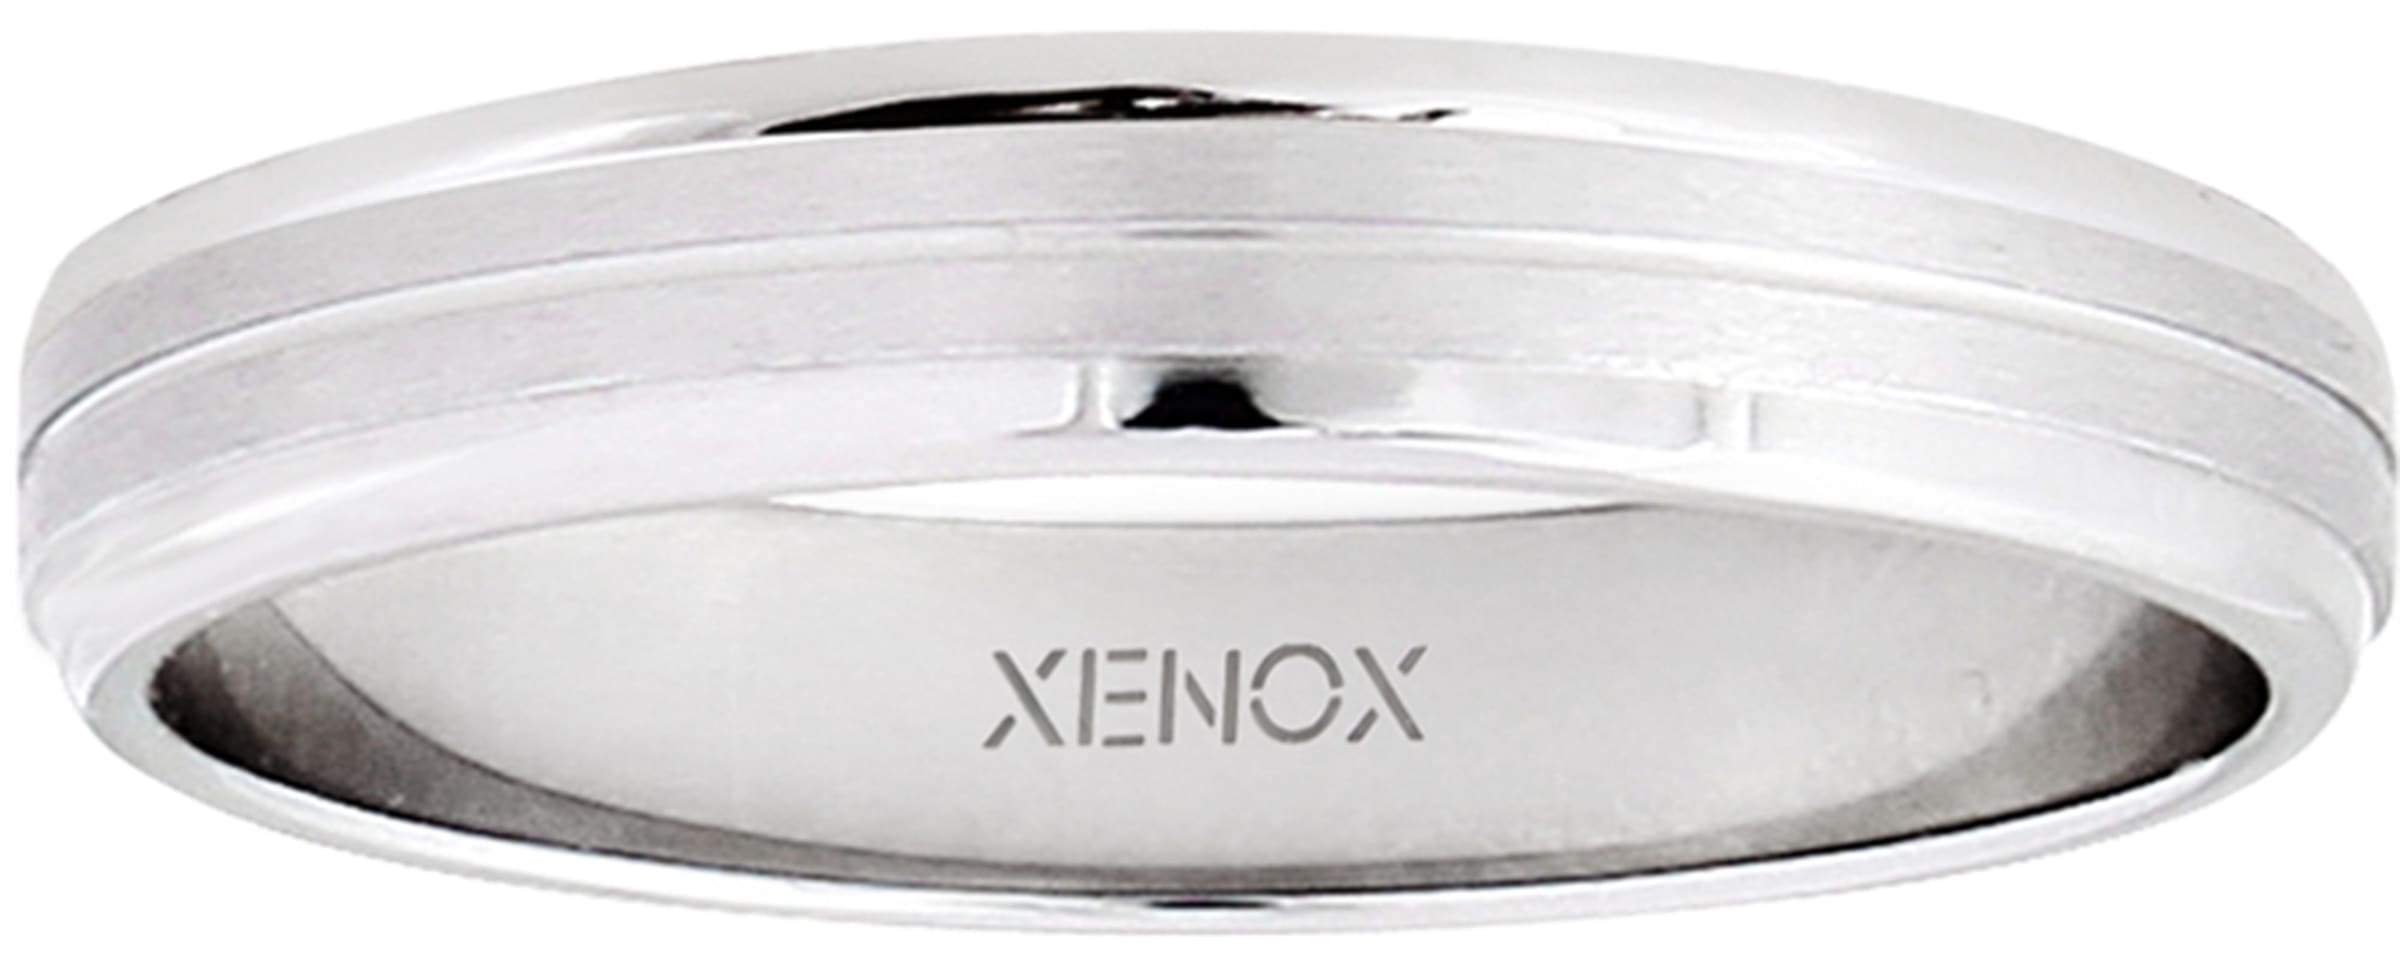 XENOX Partnerring »Xenox & Friends, X2547, X2548«, wahlweise mit oder ohne Zirkonia